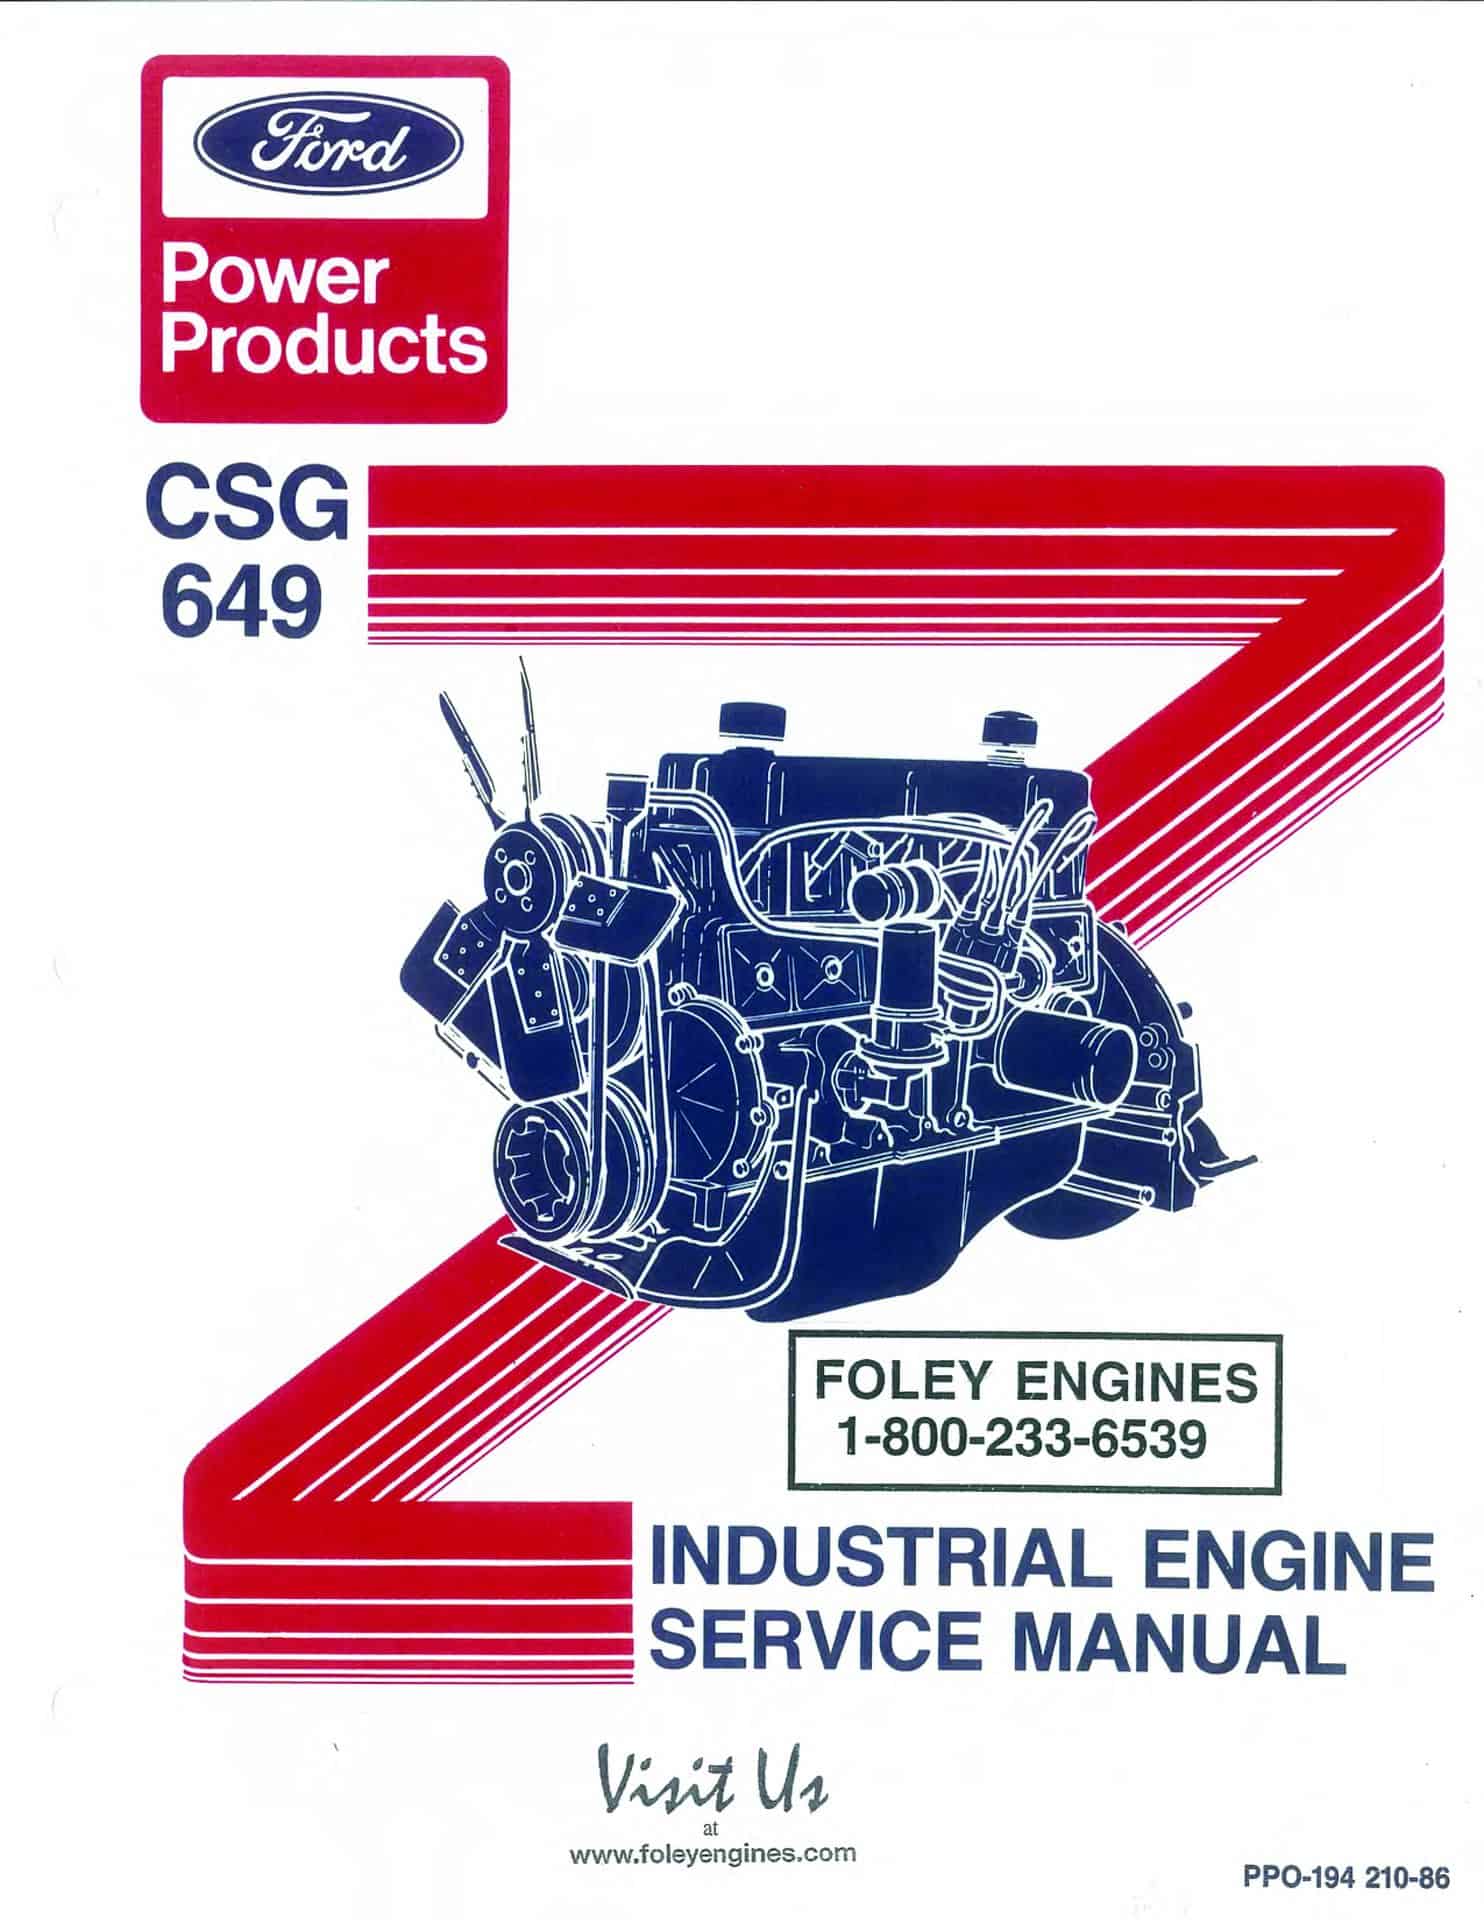 Ford CSG649 manual